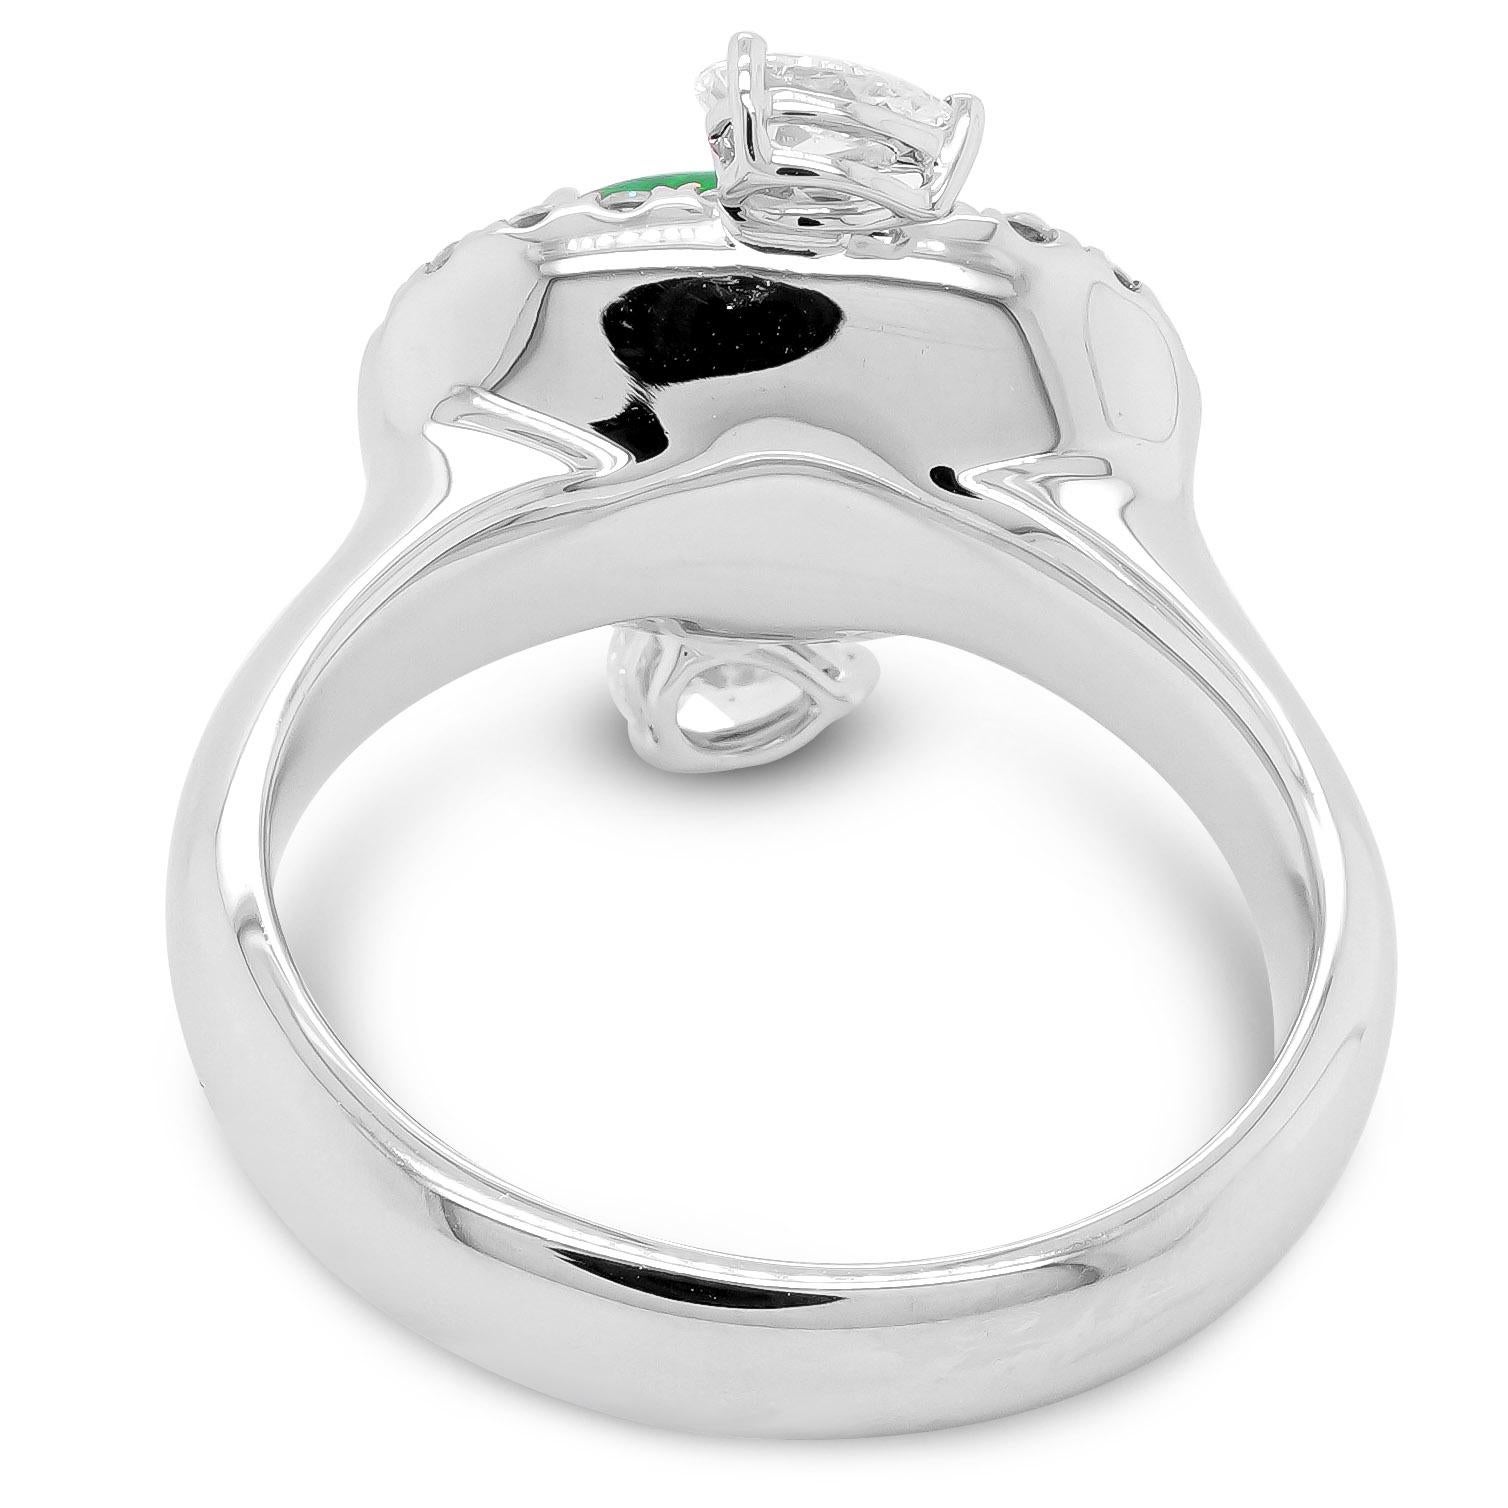 Oval Cut 2.27 Carat 'Jade like' Colombian Emerald White Diamond Cocktail 18K Ring